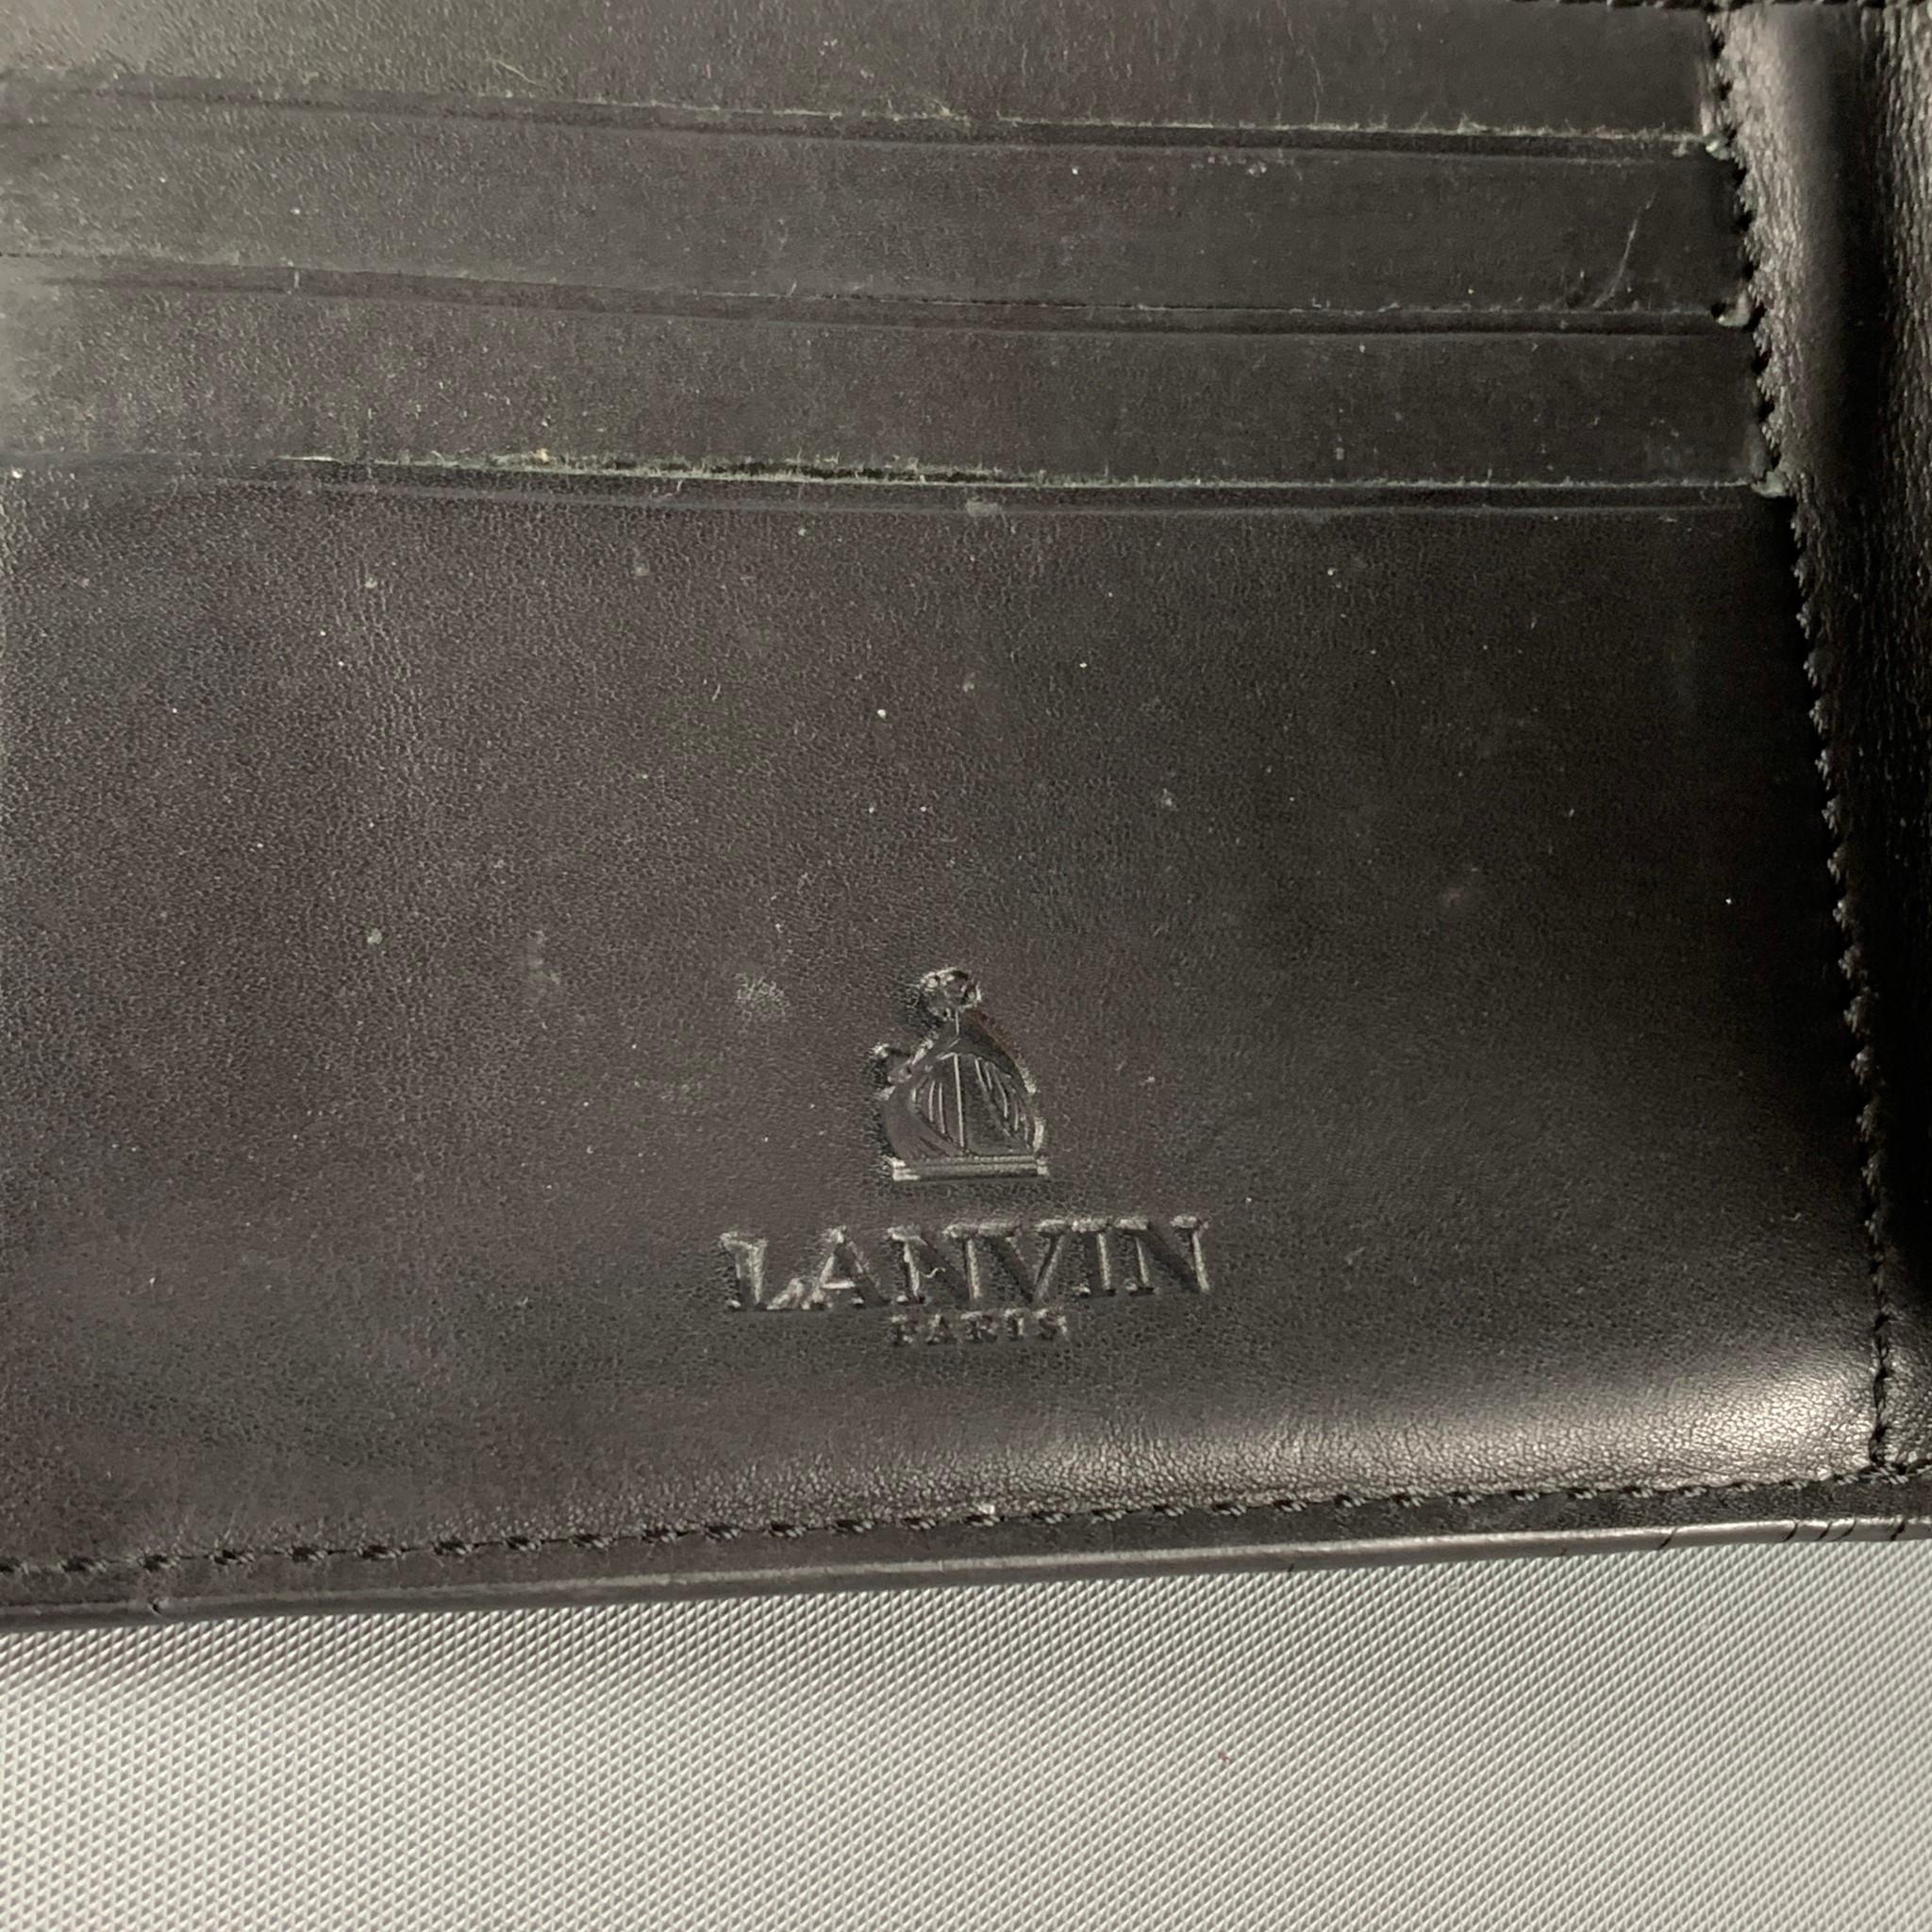 Men's LANVIN Charmeuse Black Wrinkled Patent Leather Wallet